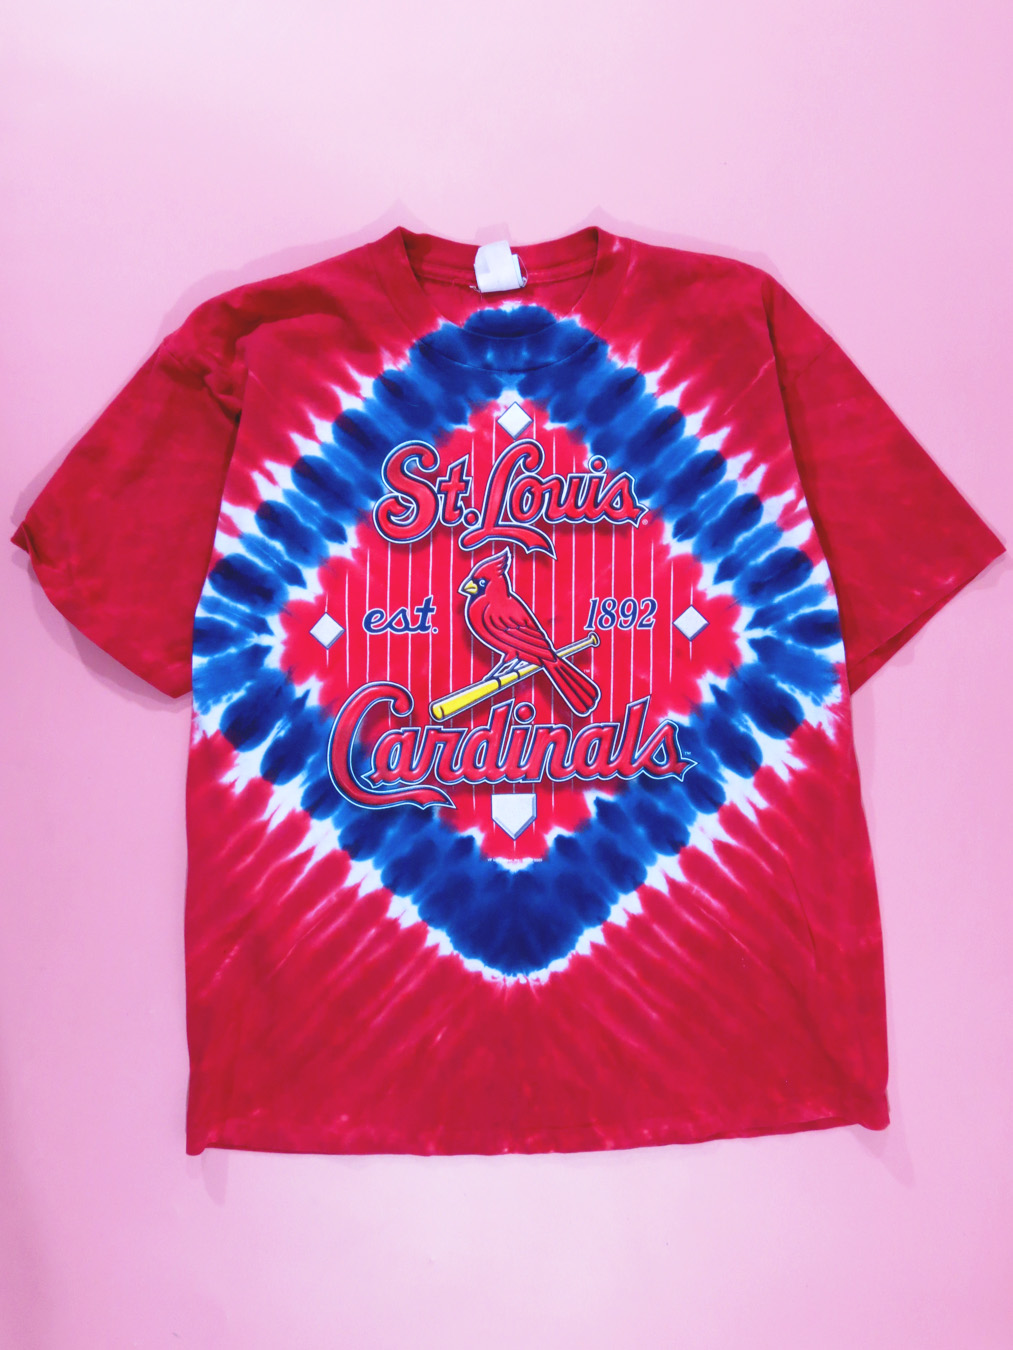 05' Red Tie Dye St. Louis Cardinals T-Shirt - 5 Star Vintage